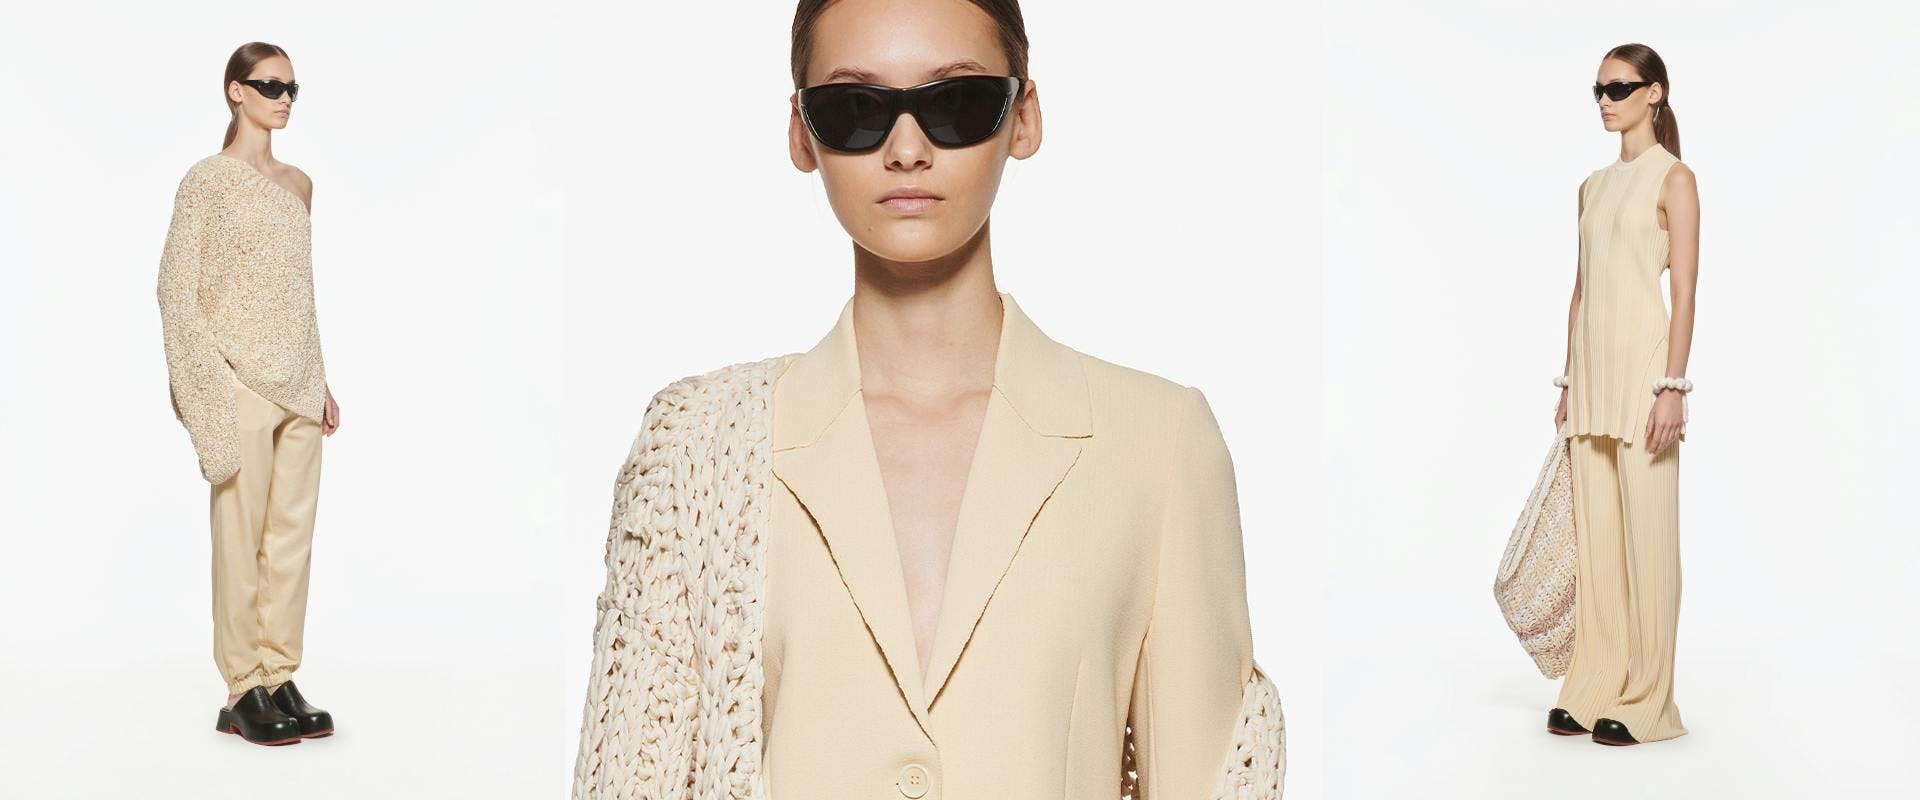 long sleeve linen sunglasses formal wear adult female person woman dress coat